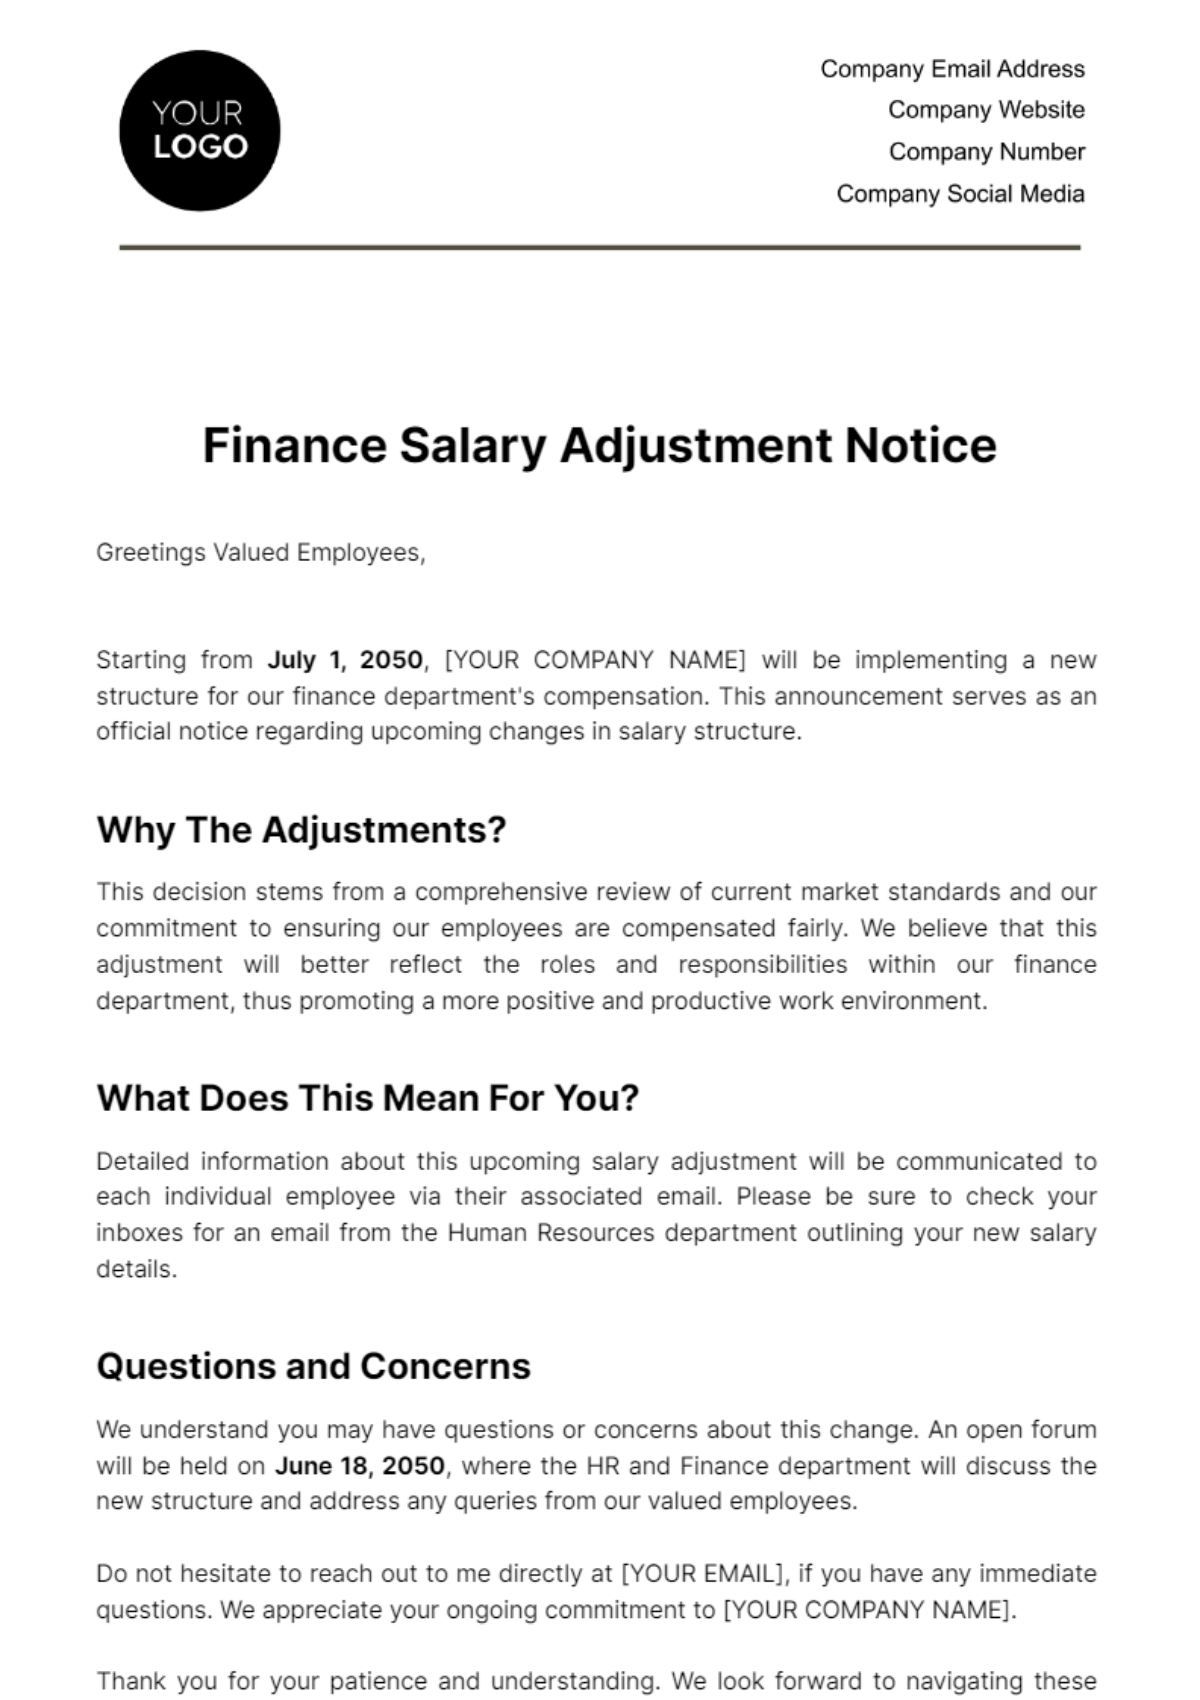 Free Finance Salary Adjustment Notice Template